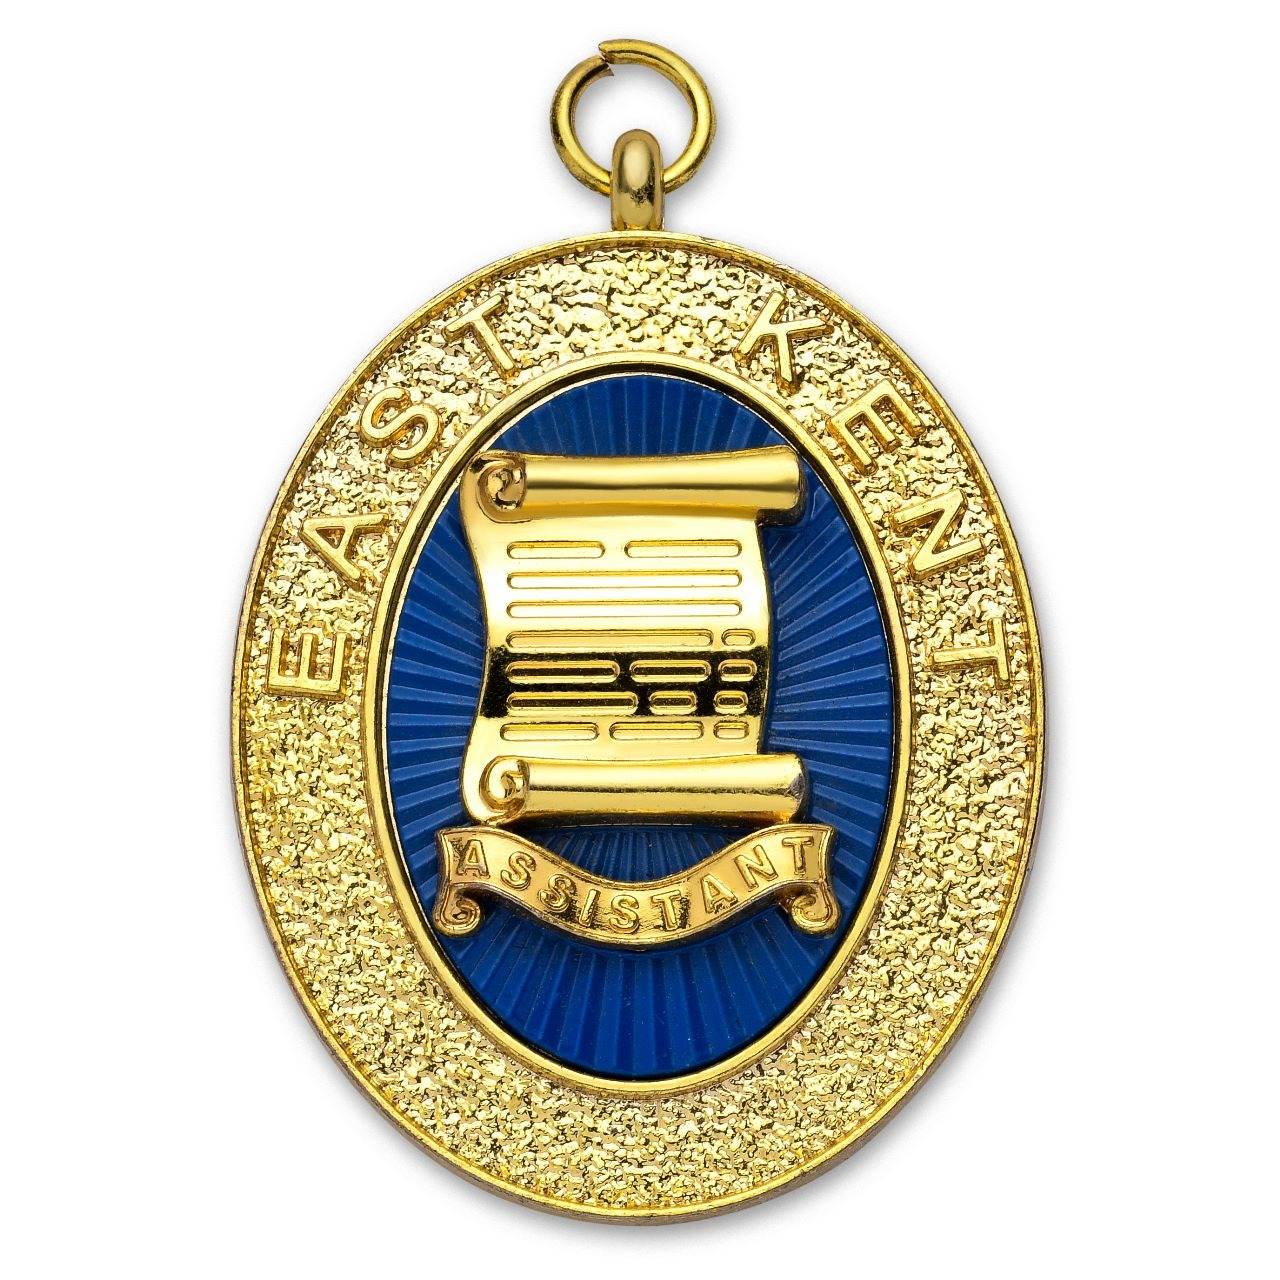 Grand Assistant Registrar Provincial Craft English Regulation Collar Jewel - East Kent Gold & Blue - Bricks Masons